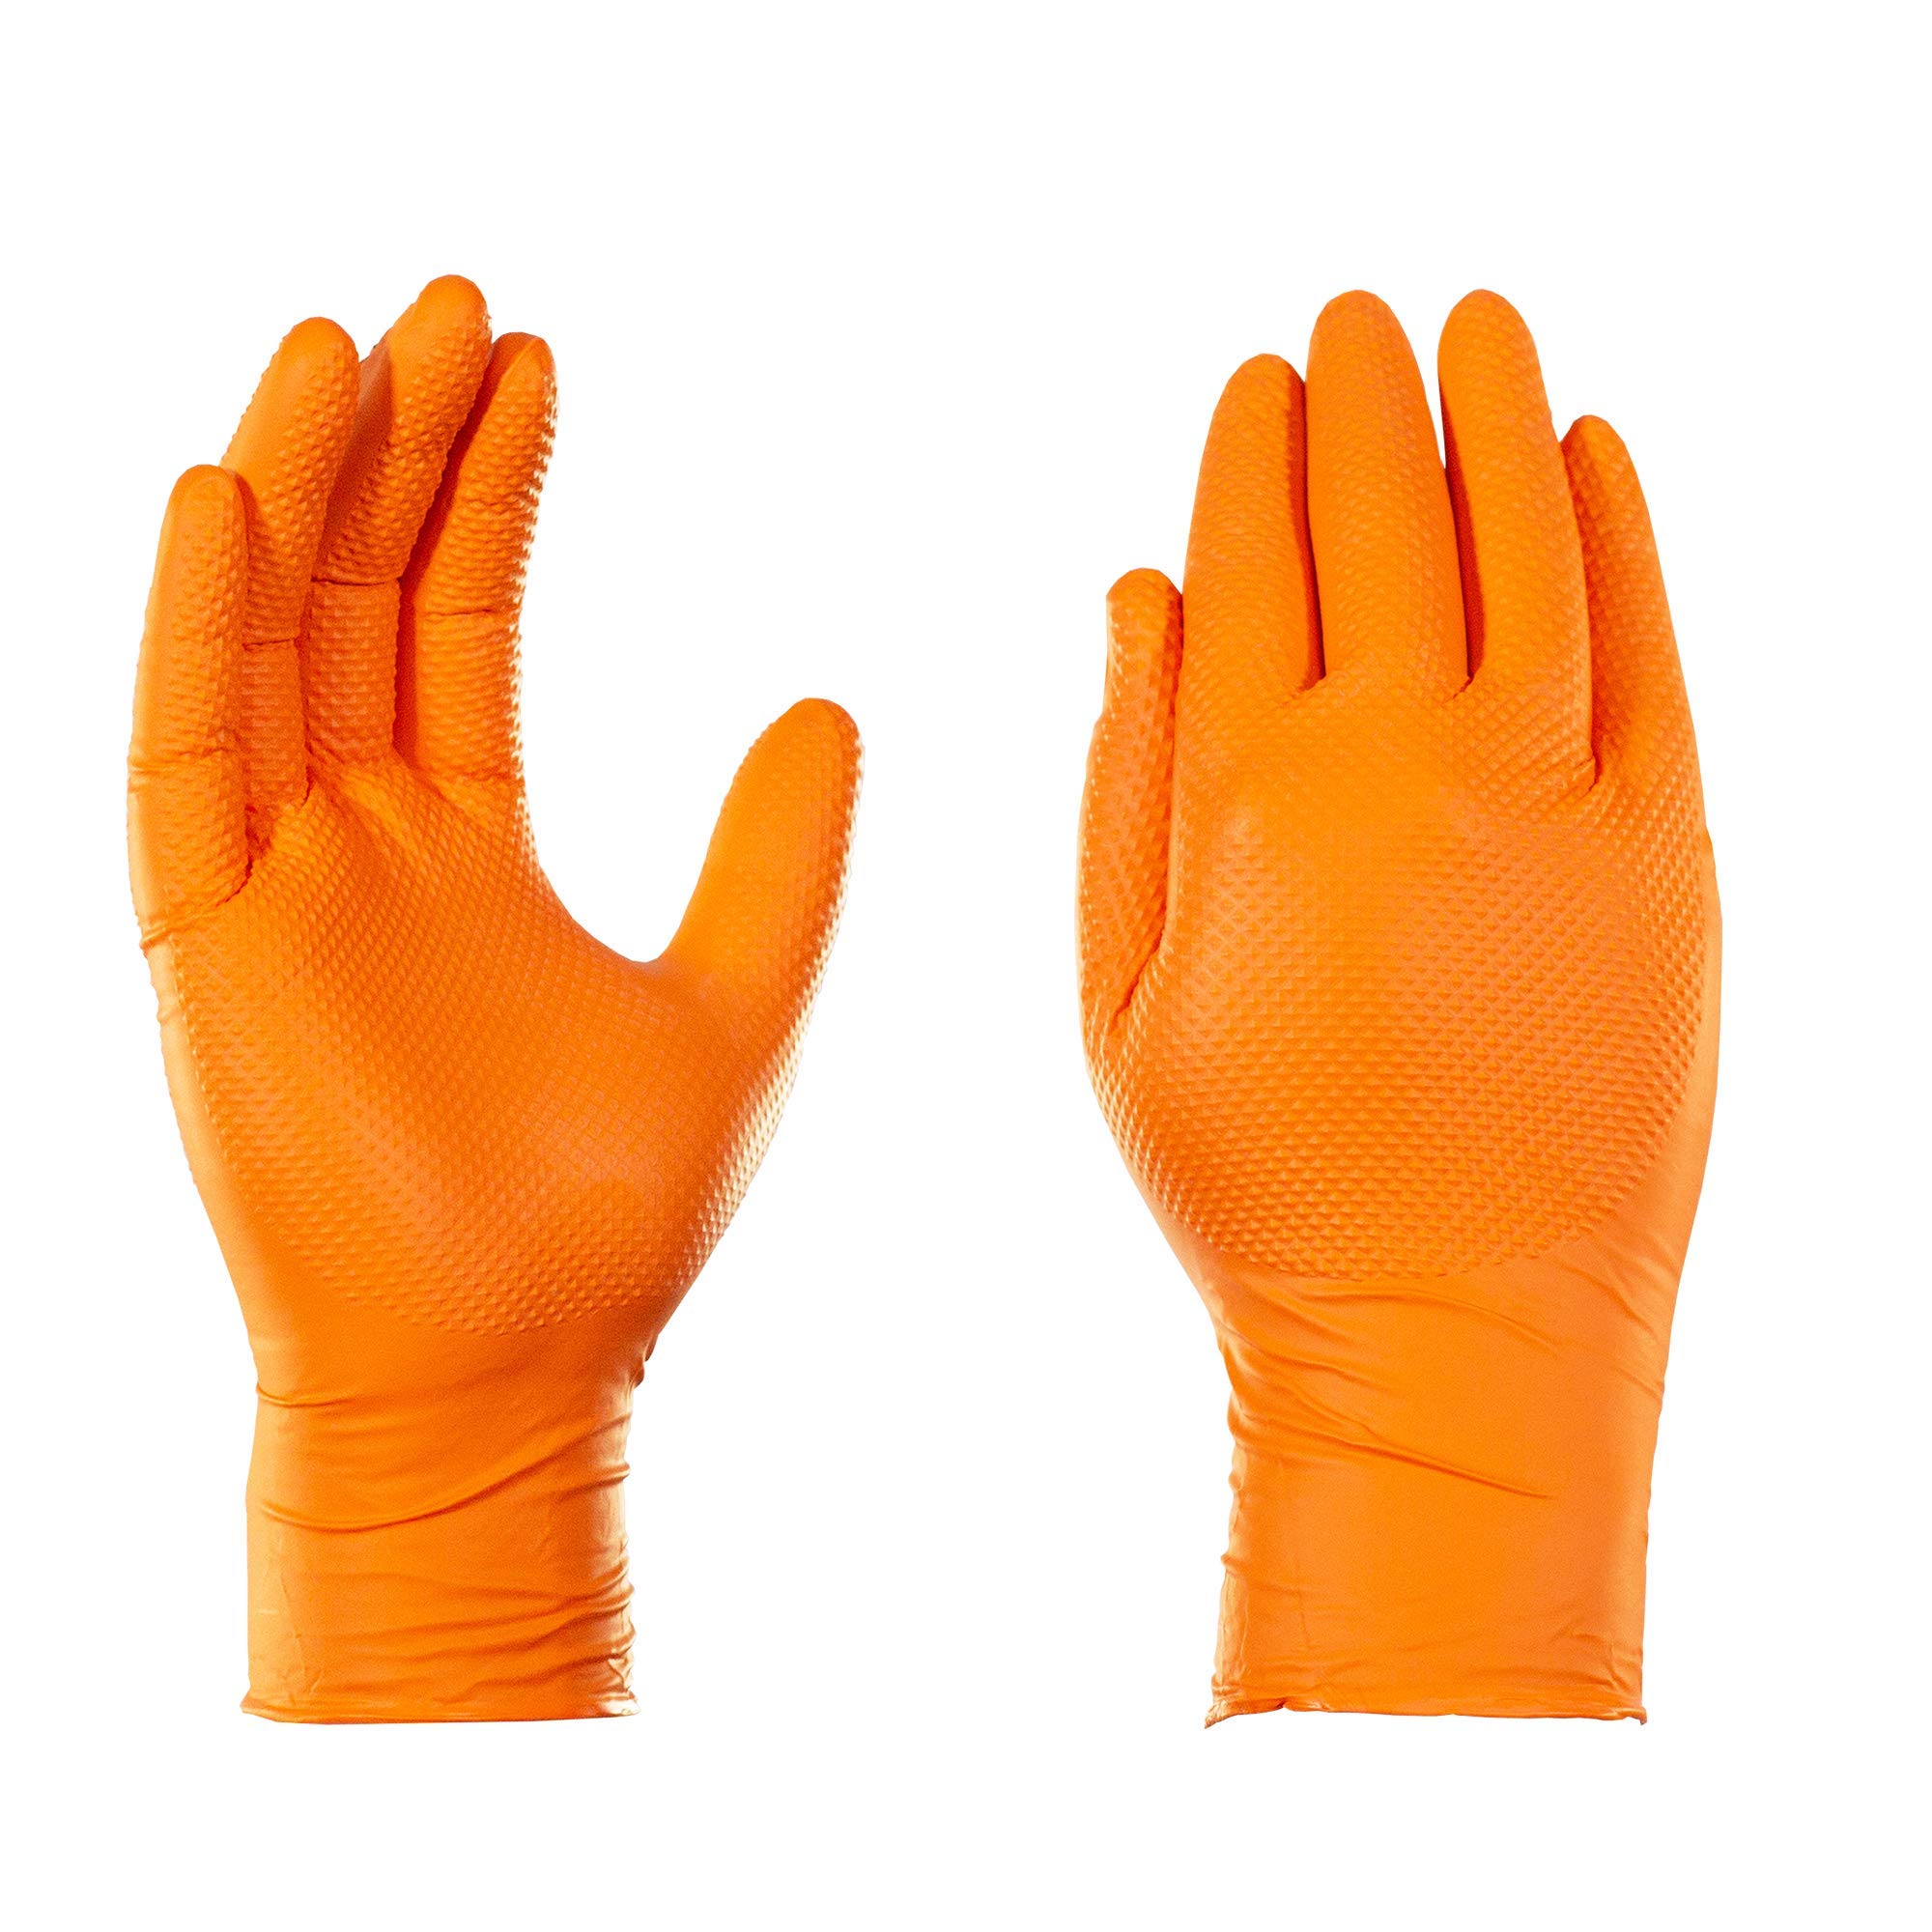 GLOVEWORKS HD Orange Nitrile Disposable Gloves, 8 Mil, Latex and Powder Free, Industrial, Food Safe, Raised Diamond Texture, Medium, Case of 1000 $136.95